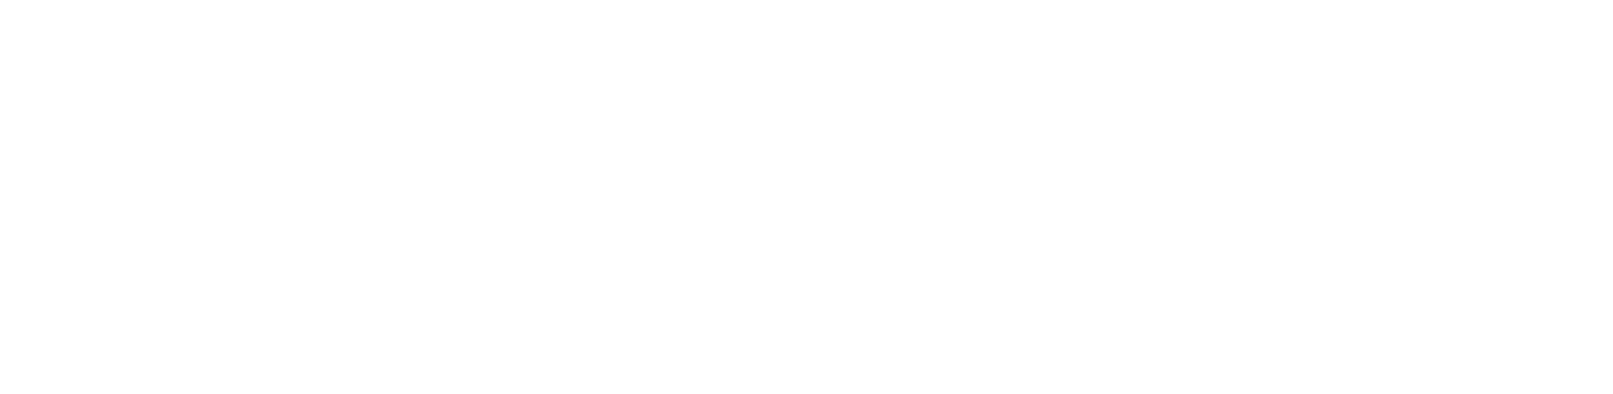 Life Quote: Dificil pa kies, pero un di mi faboritonan ta “May you choices reflect your hopes, not your fears” by Nel...